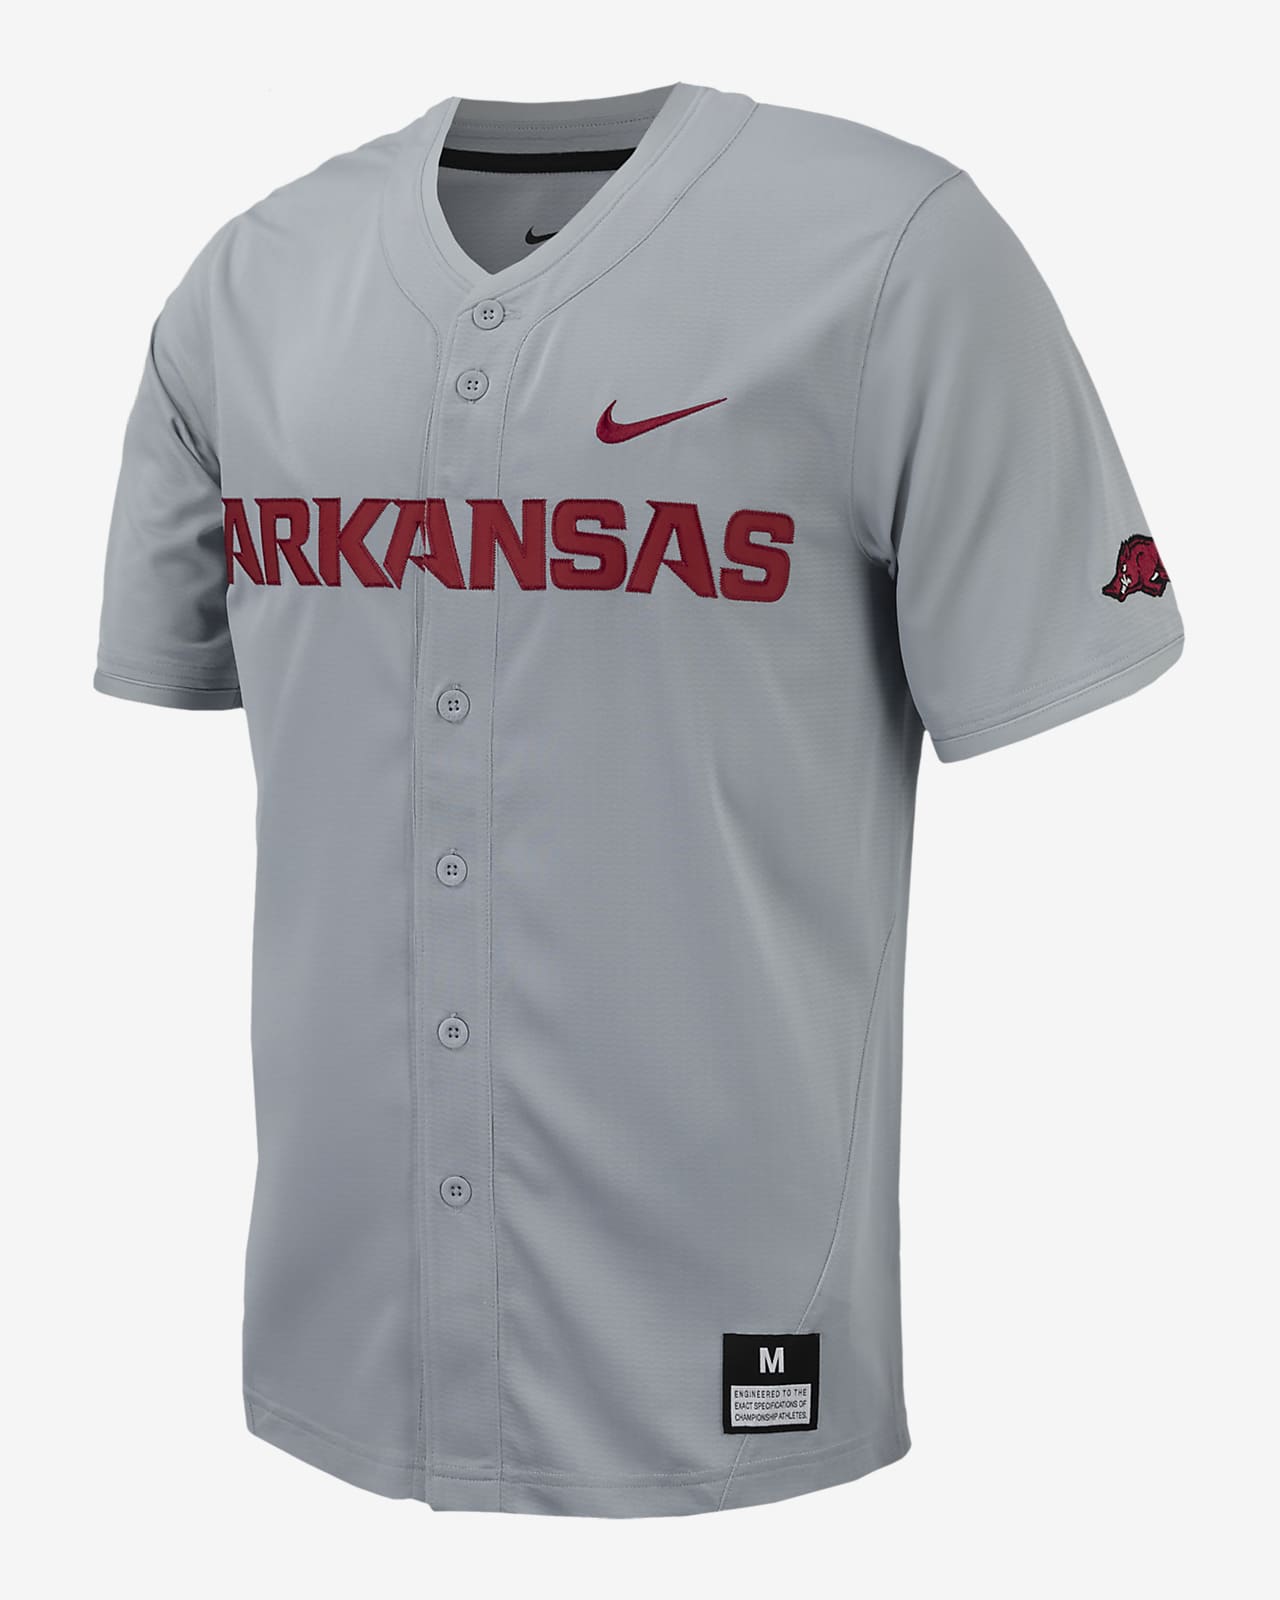 Arkansas Men's Nike College Replica Baseball Jersey